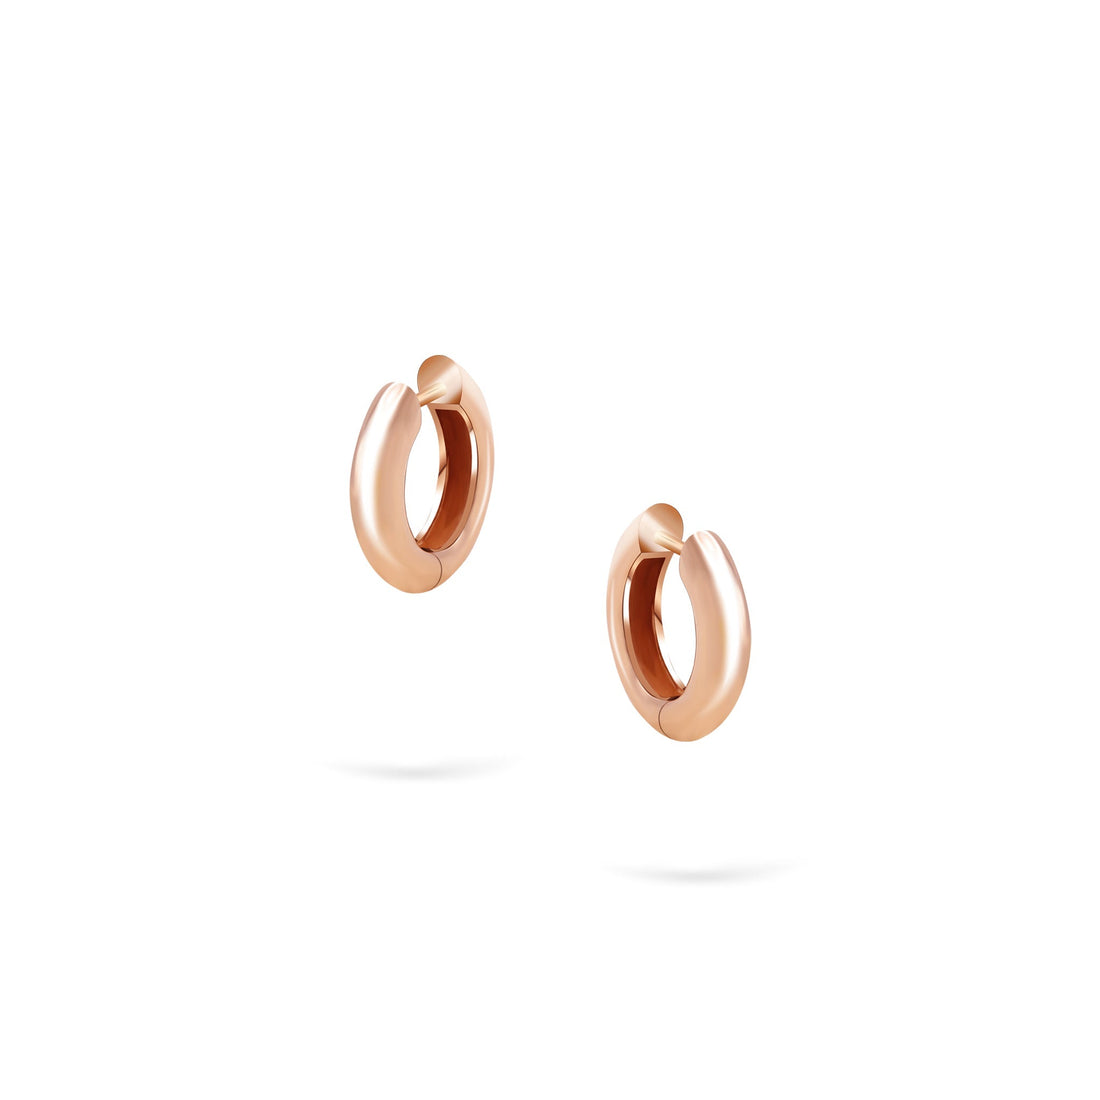 Jewelry Goldens Hoops | Small Gold Earrings | 14K - Rose / Pair - earrings Zengoda Shop online from Artisan Brands